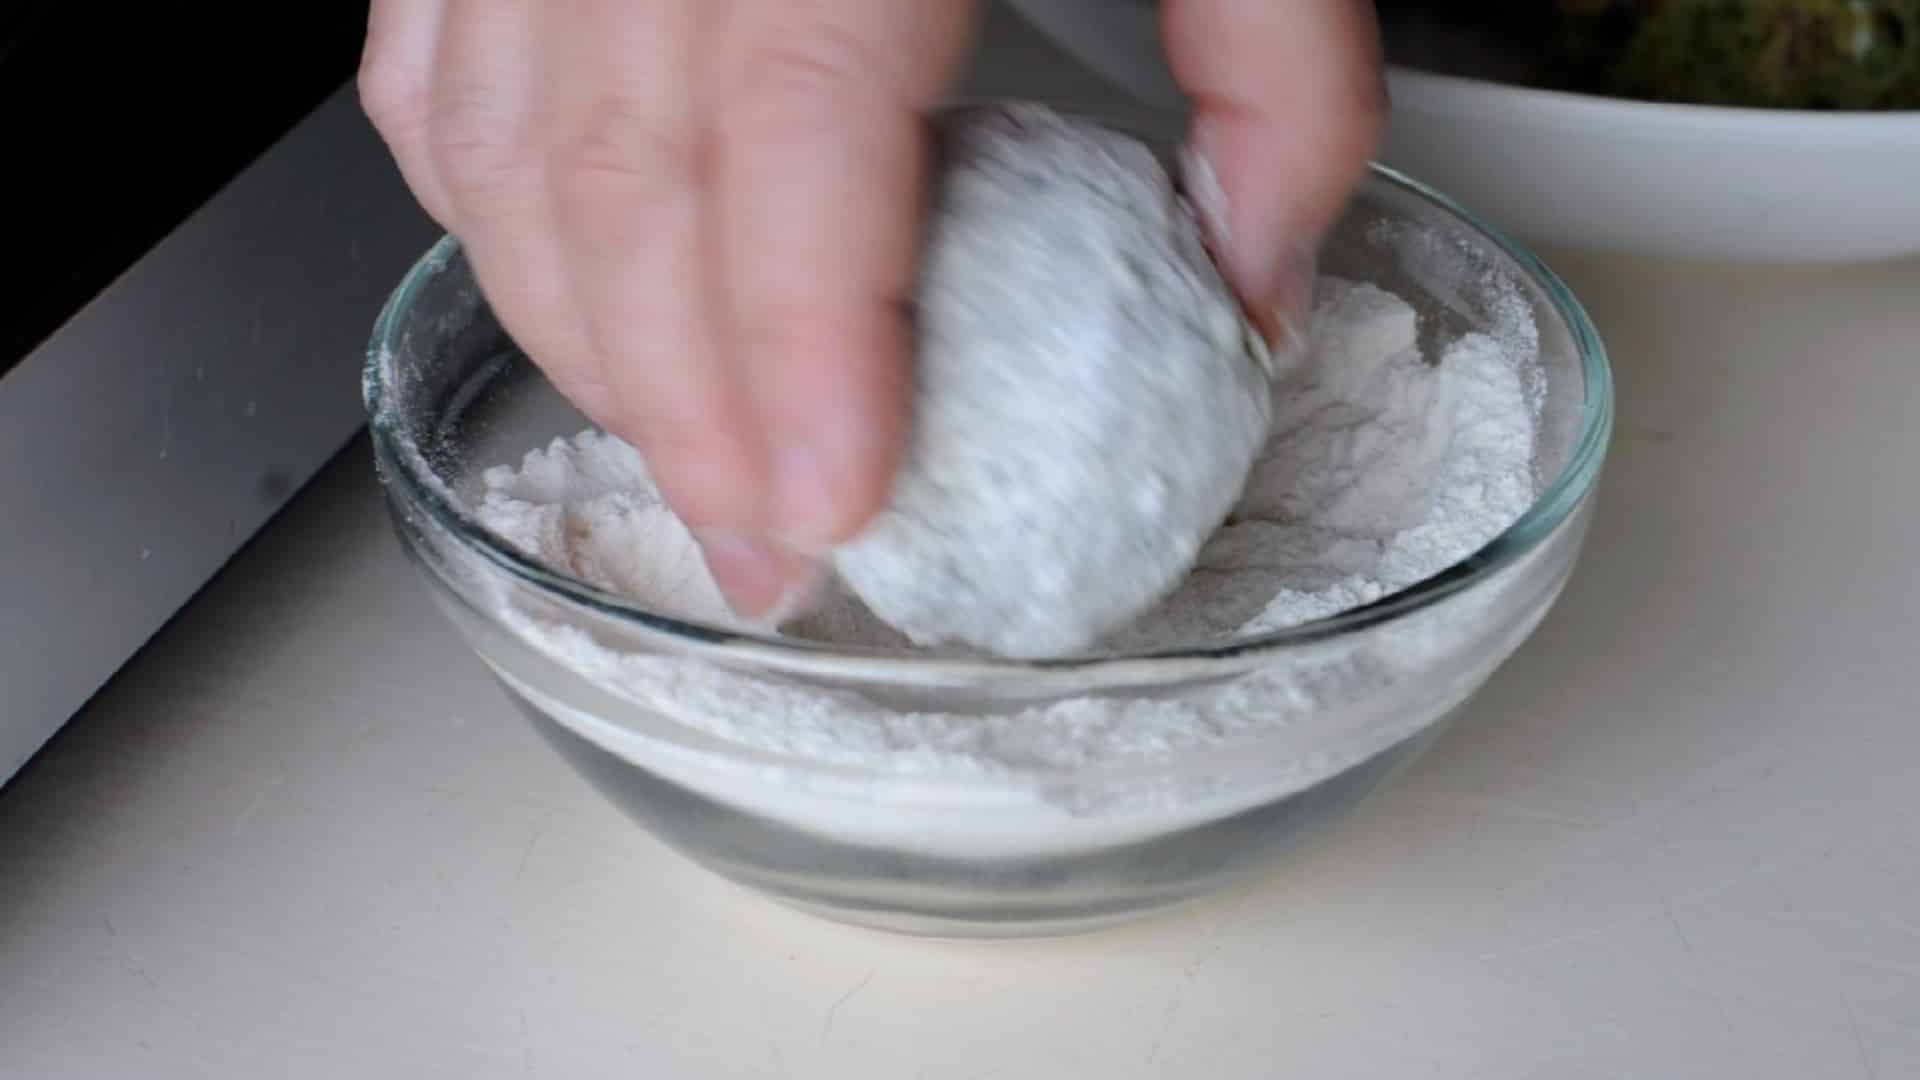 Coat them with flour